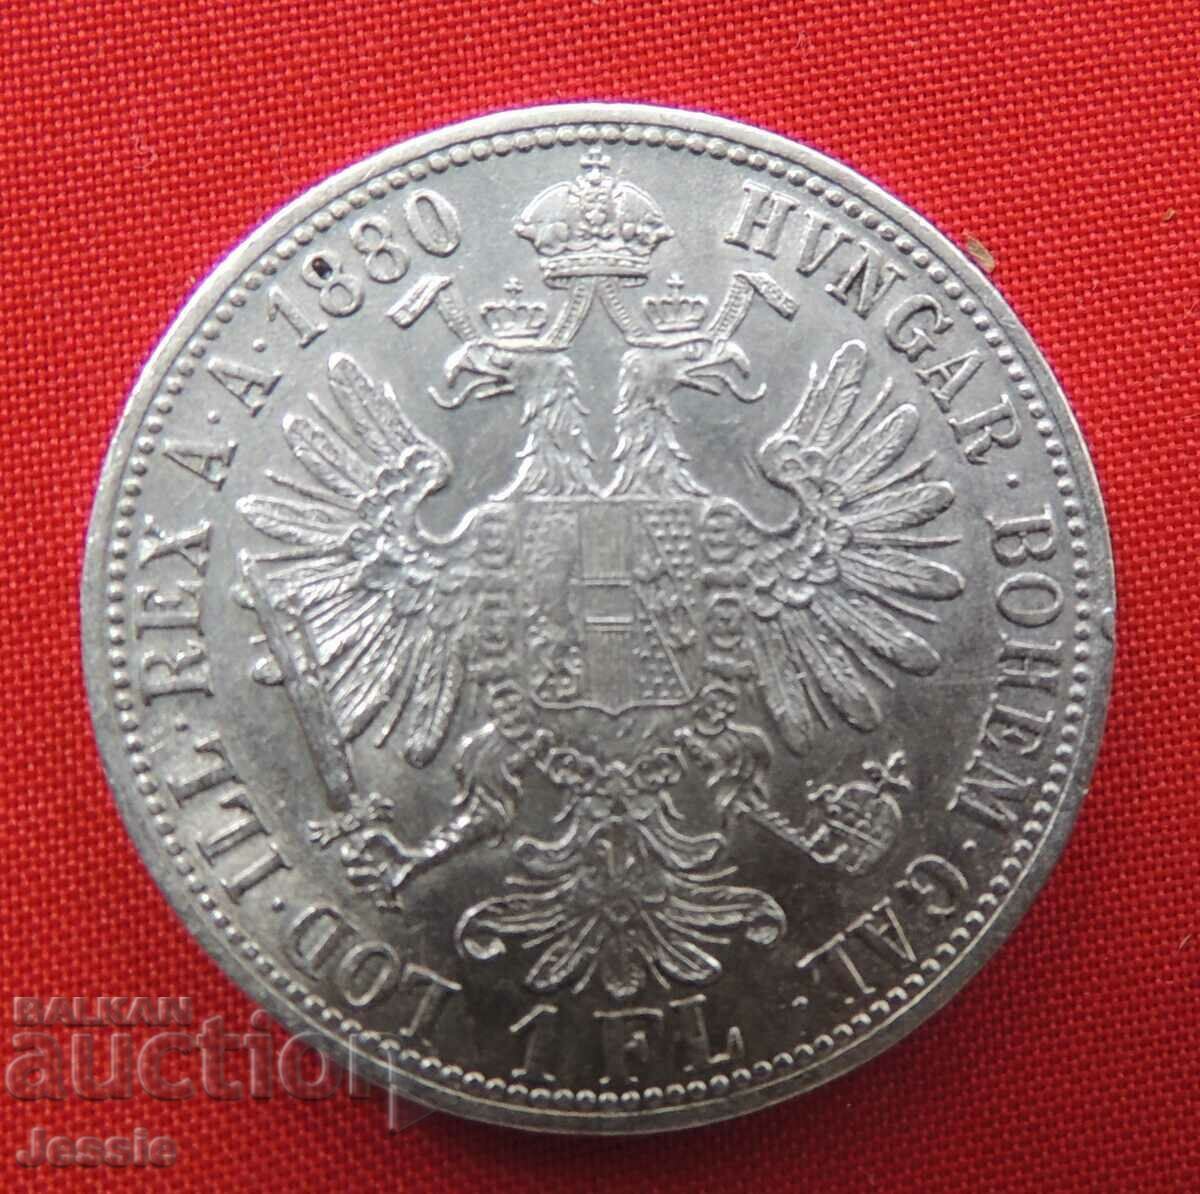 1 florin 1880 Austria-Hungary silver